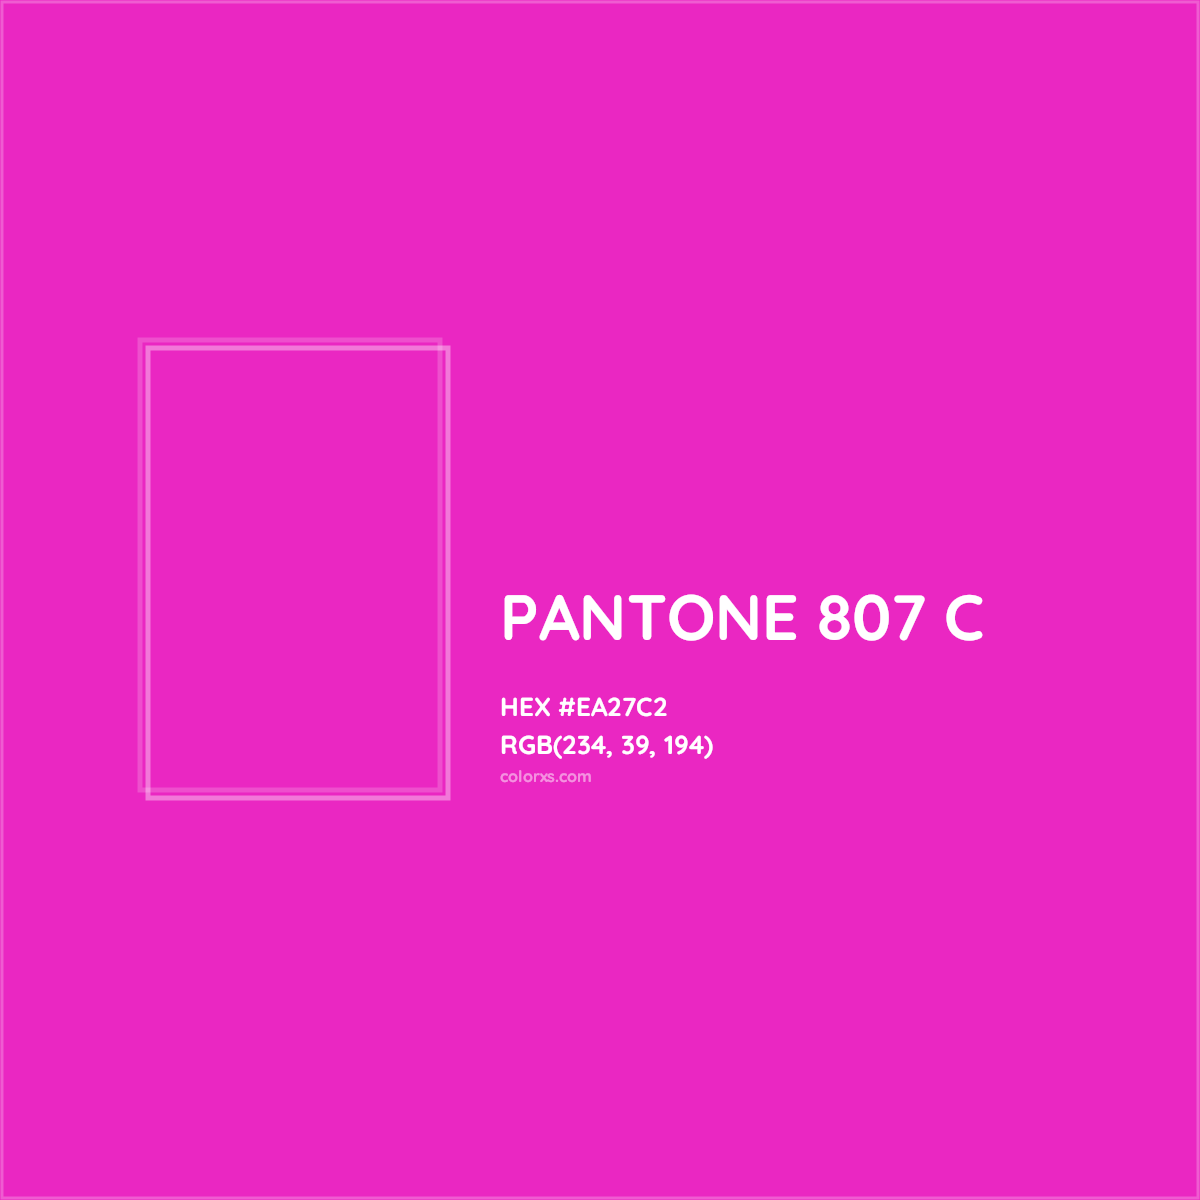 HEX #EA27C2 PANTONE 807 C CMS Pantone PMS - Color Code